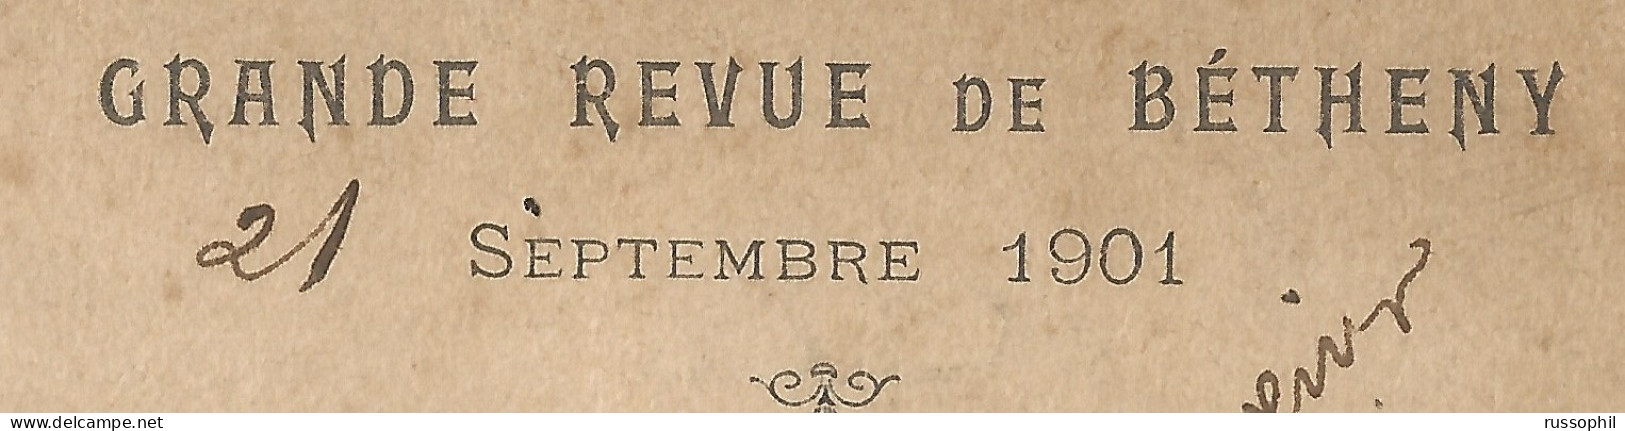 FRANCO RUSSIAN ALLIANCE - GRANDE REVUE DE BETHENY - 21 SEPTEMBRE 1901 - VUE DE BETHENY, PRES REIMS - 1901 - Evenementen